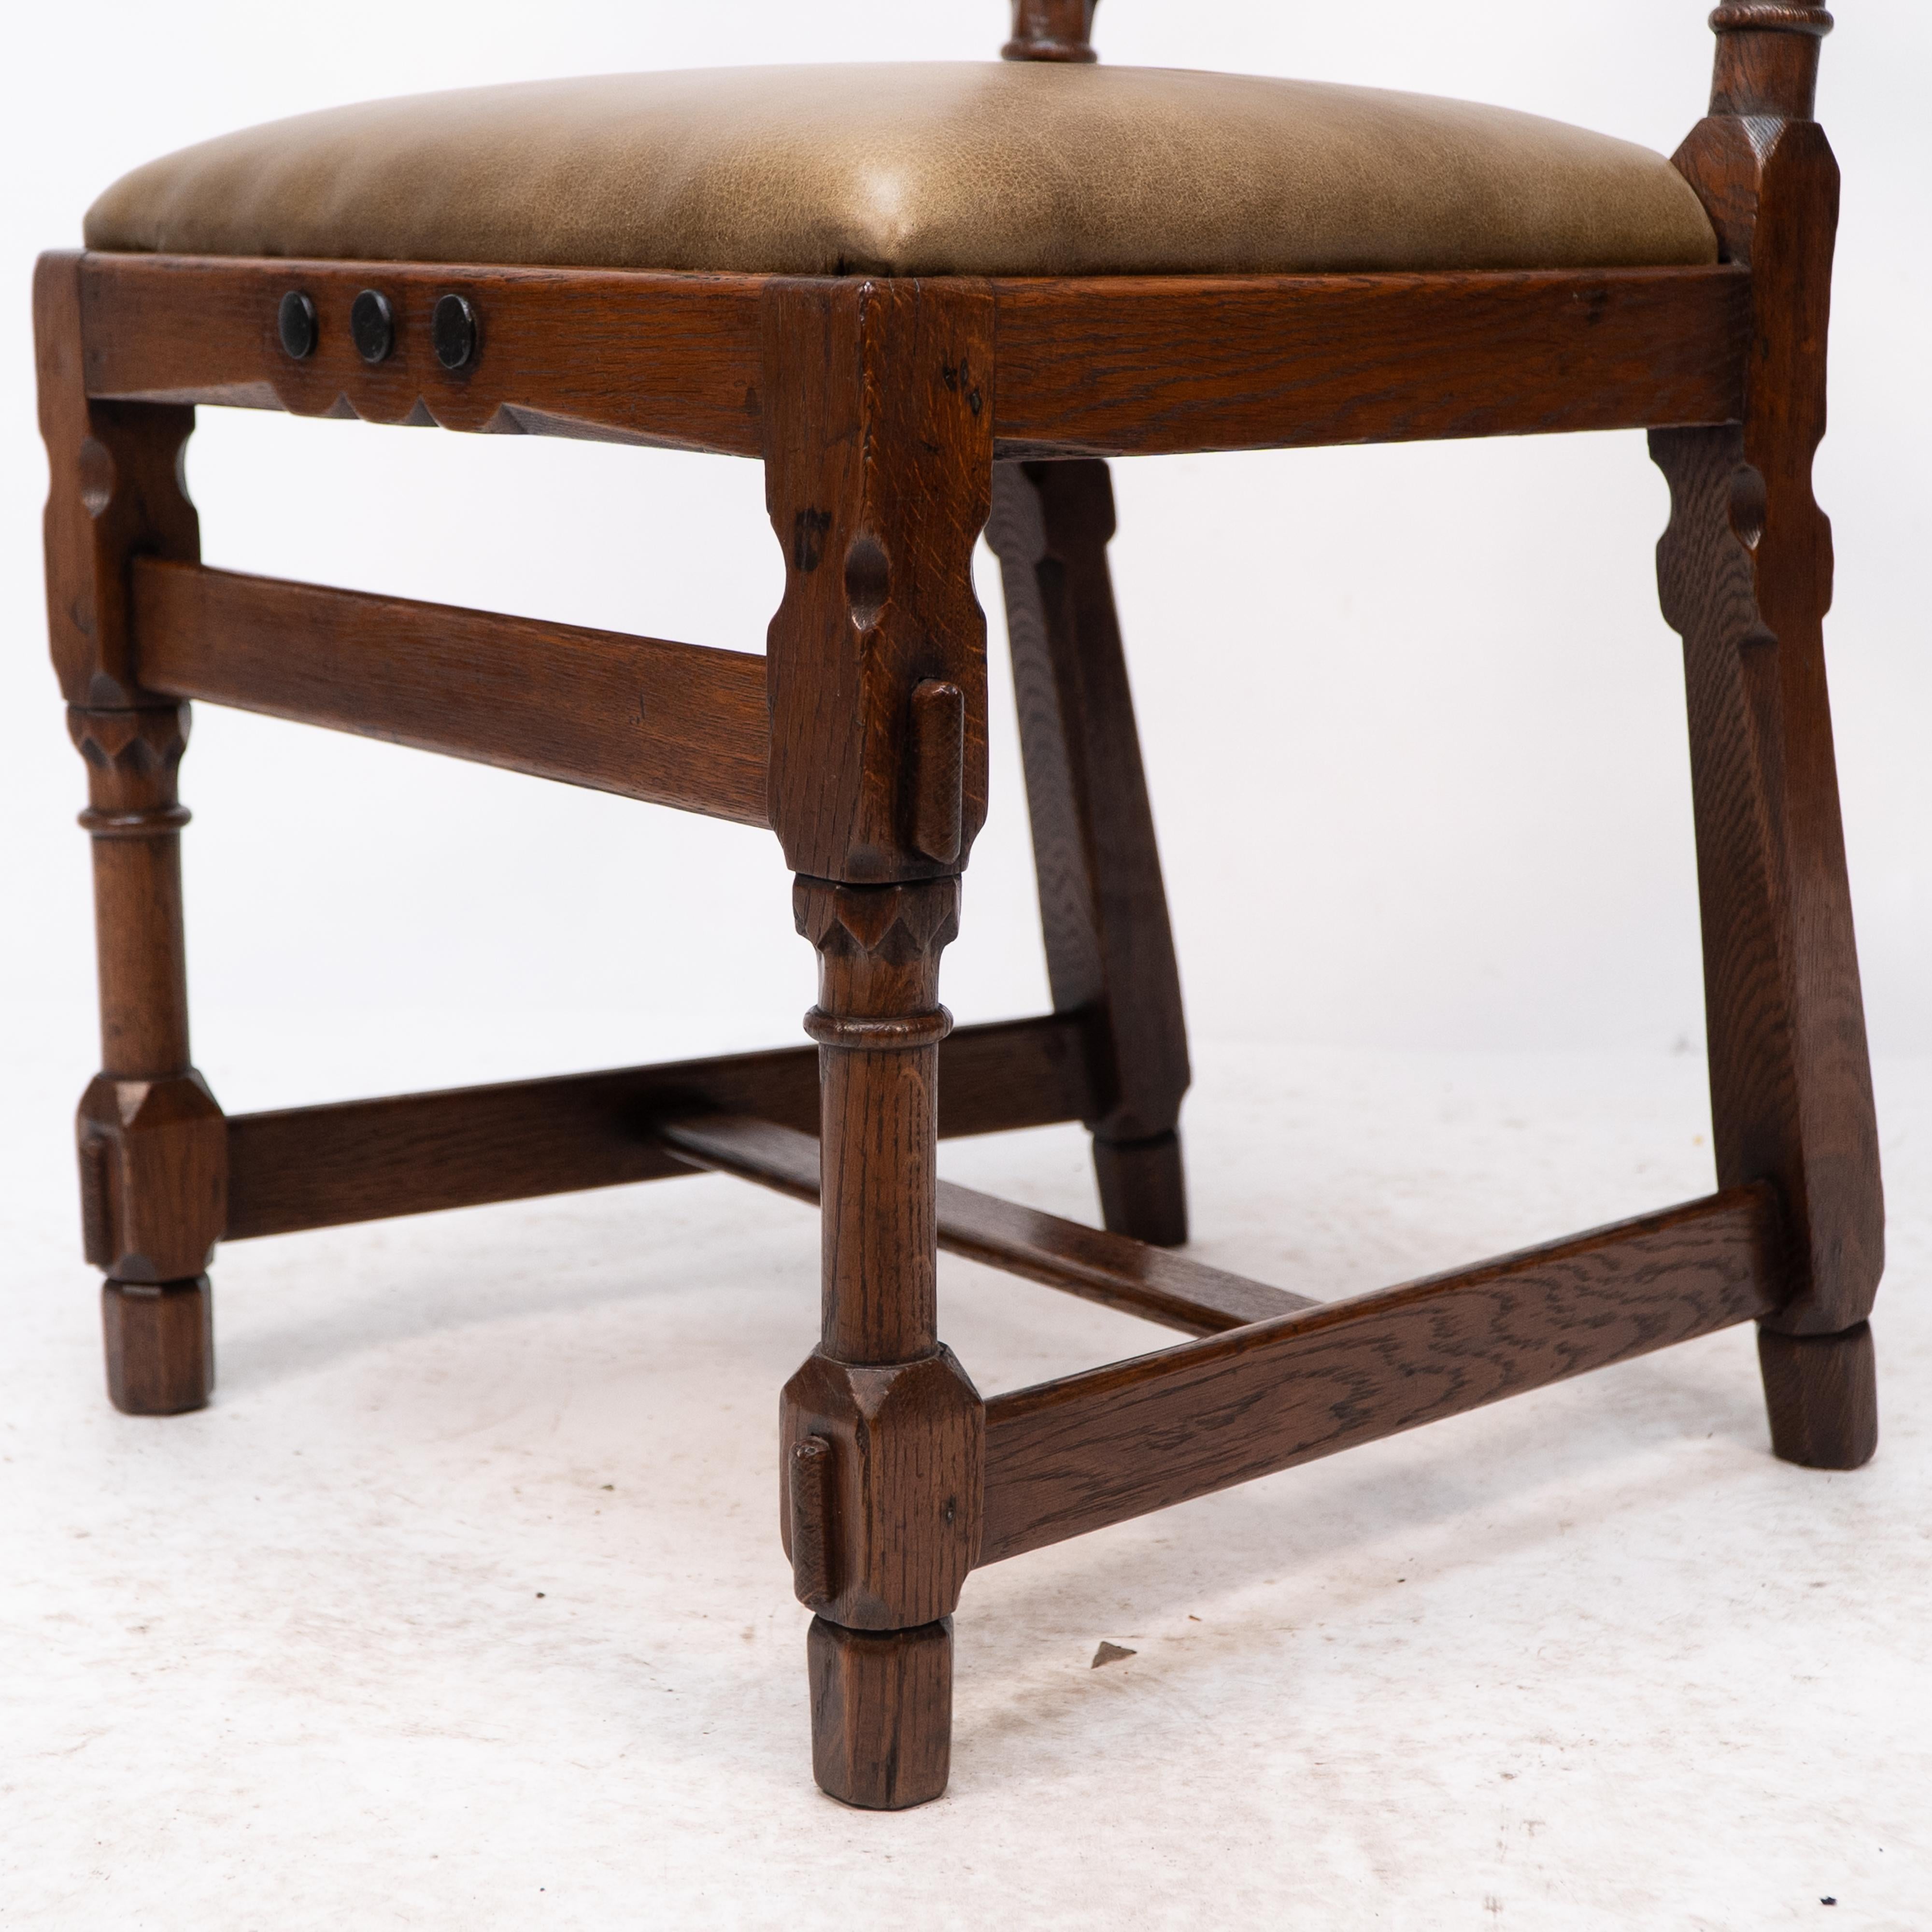 J P Seddon attri. An Aesthetic Movement oak side chair with ebonized circles For Sale 8